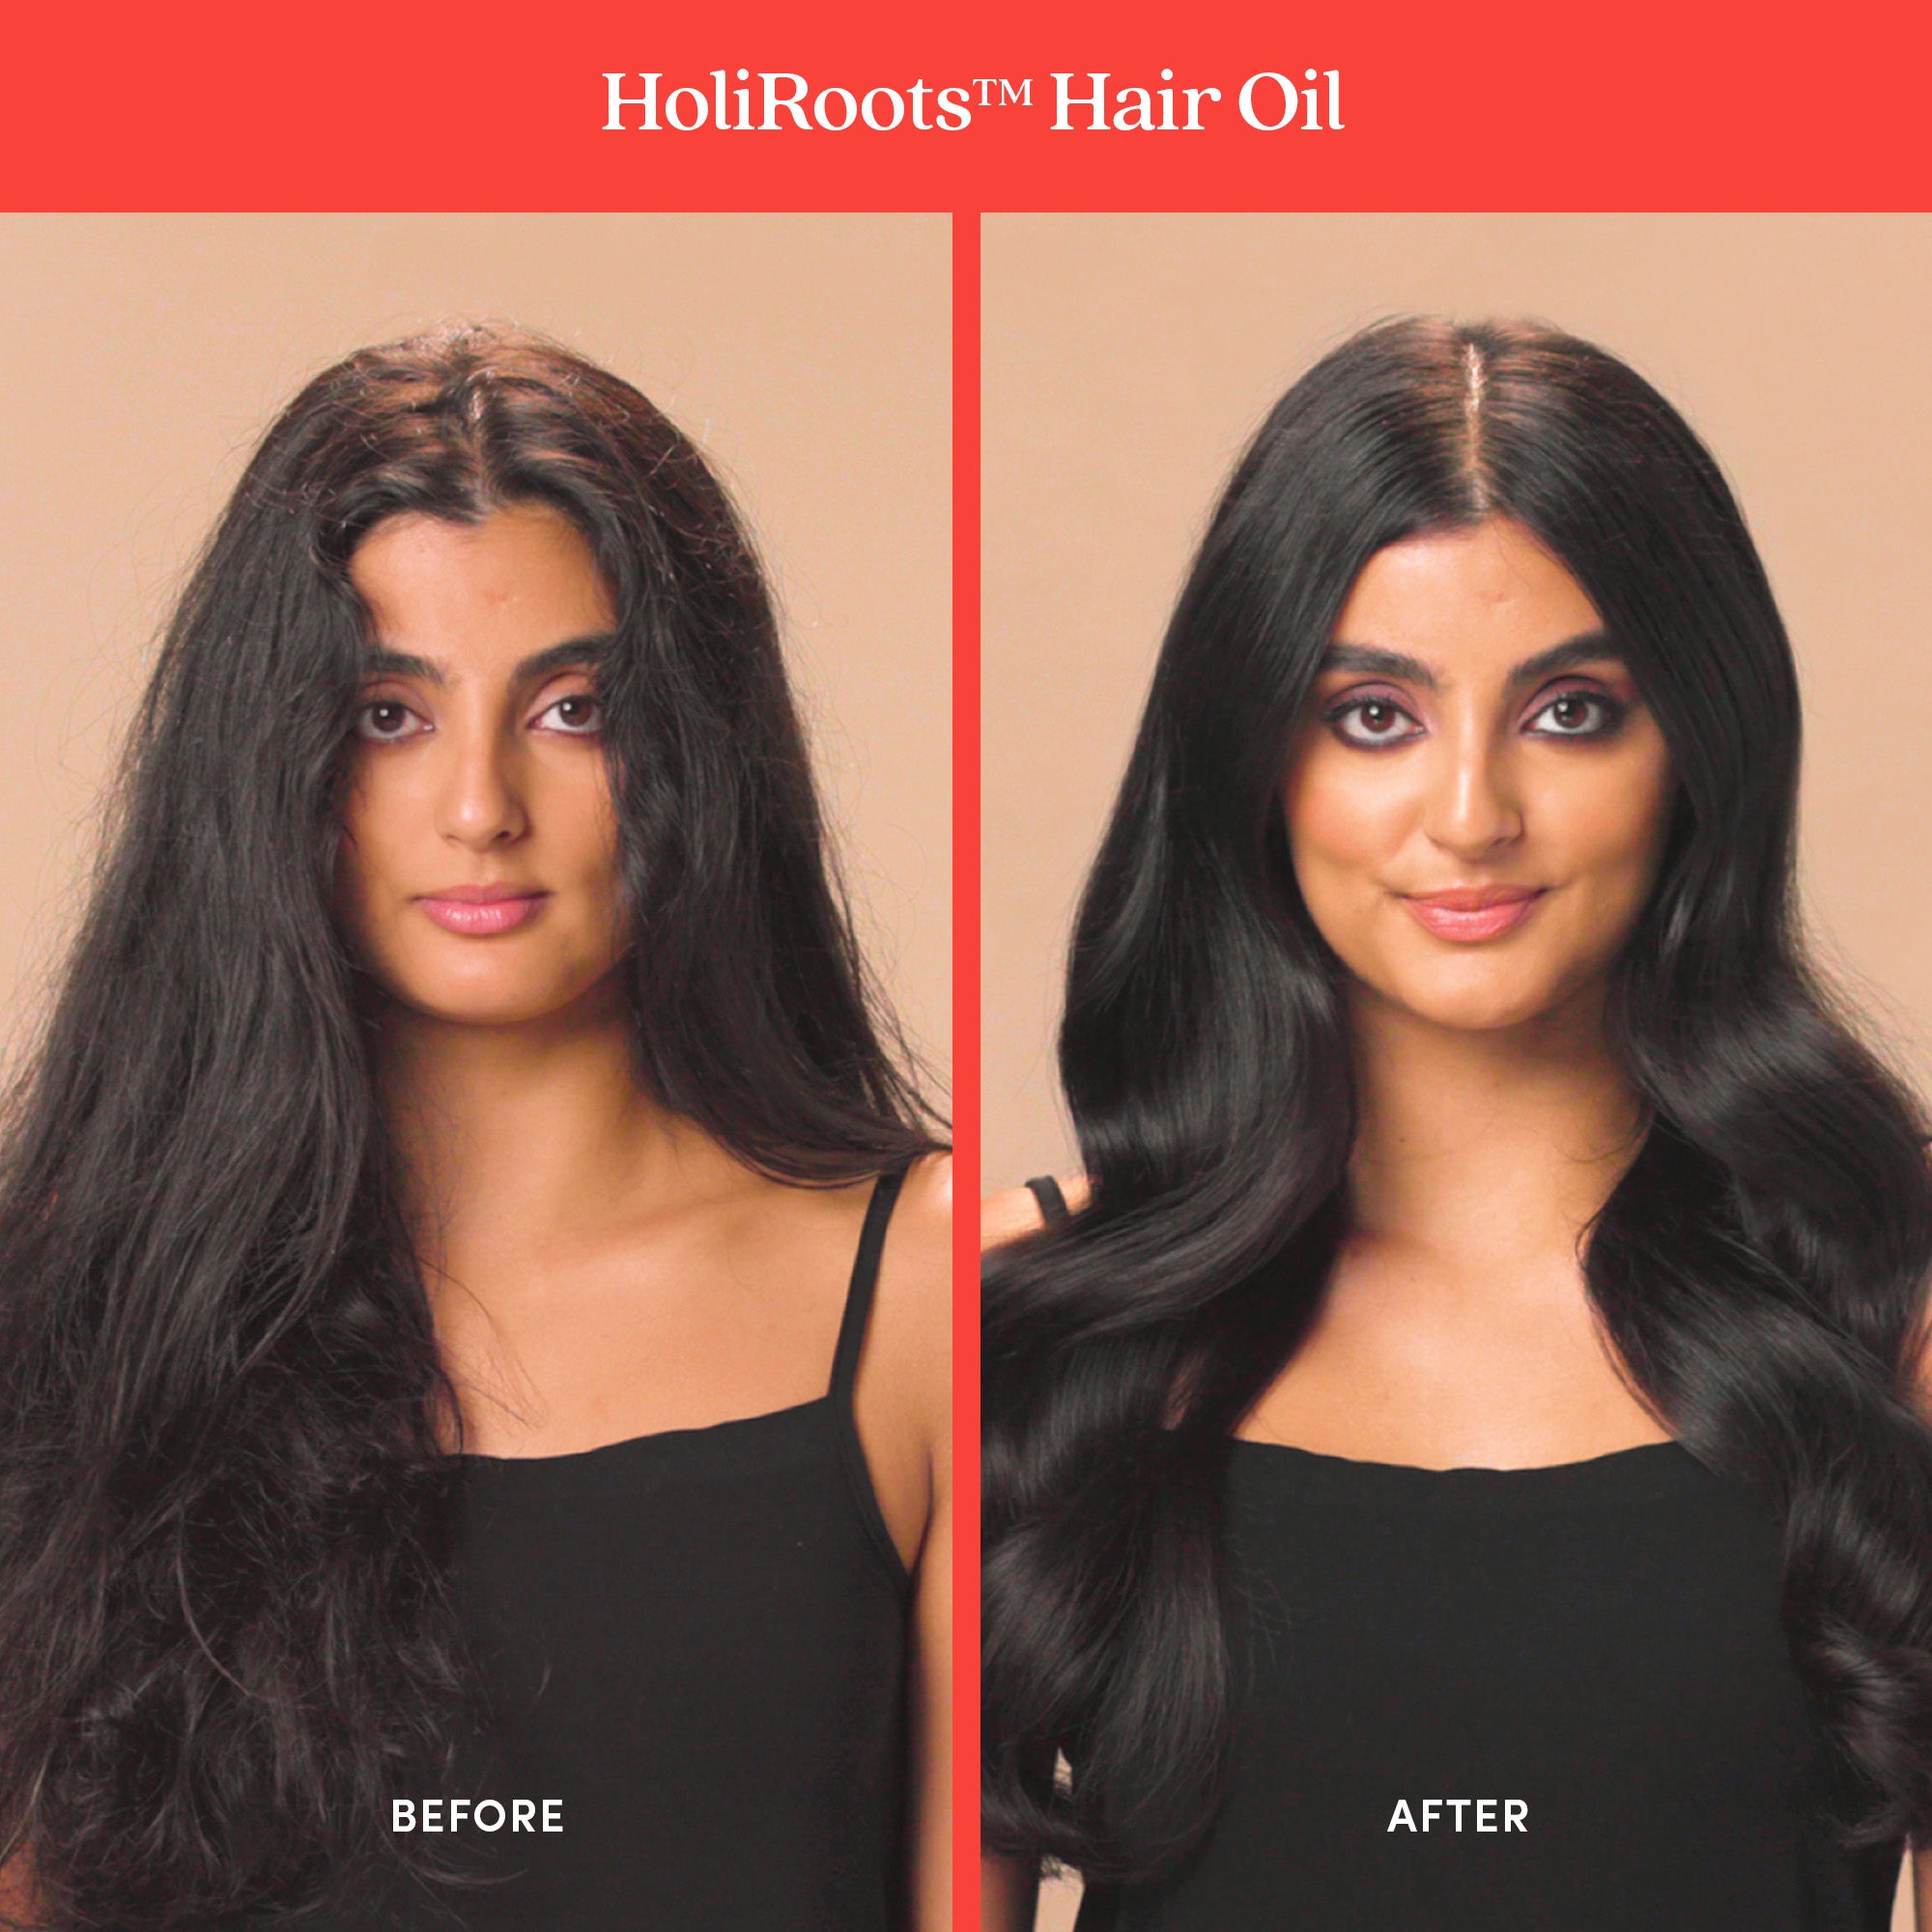 HoliRoots™ Hair Oil